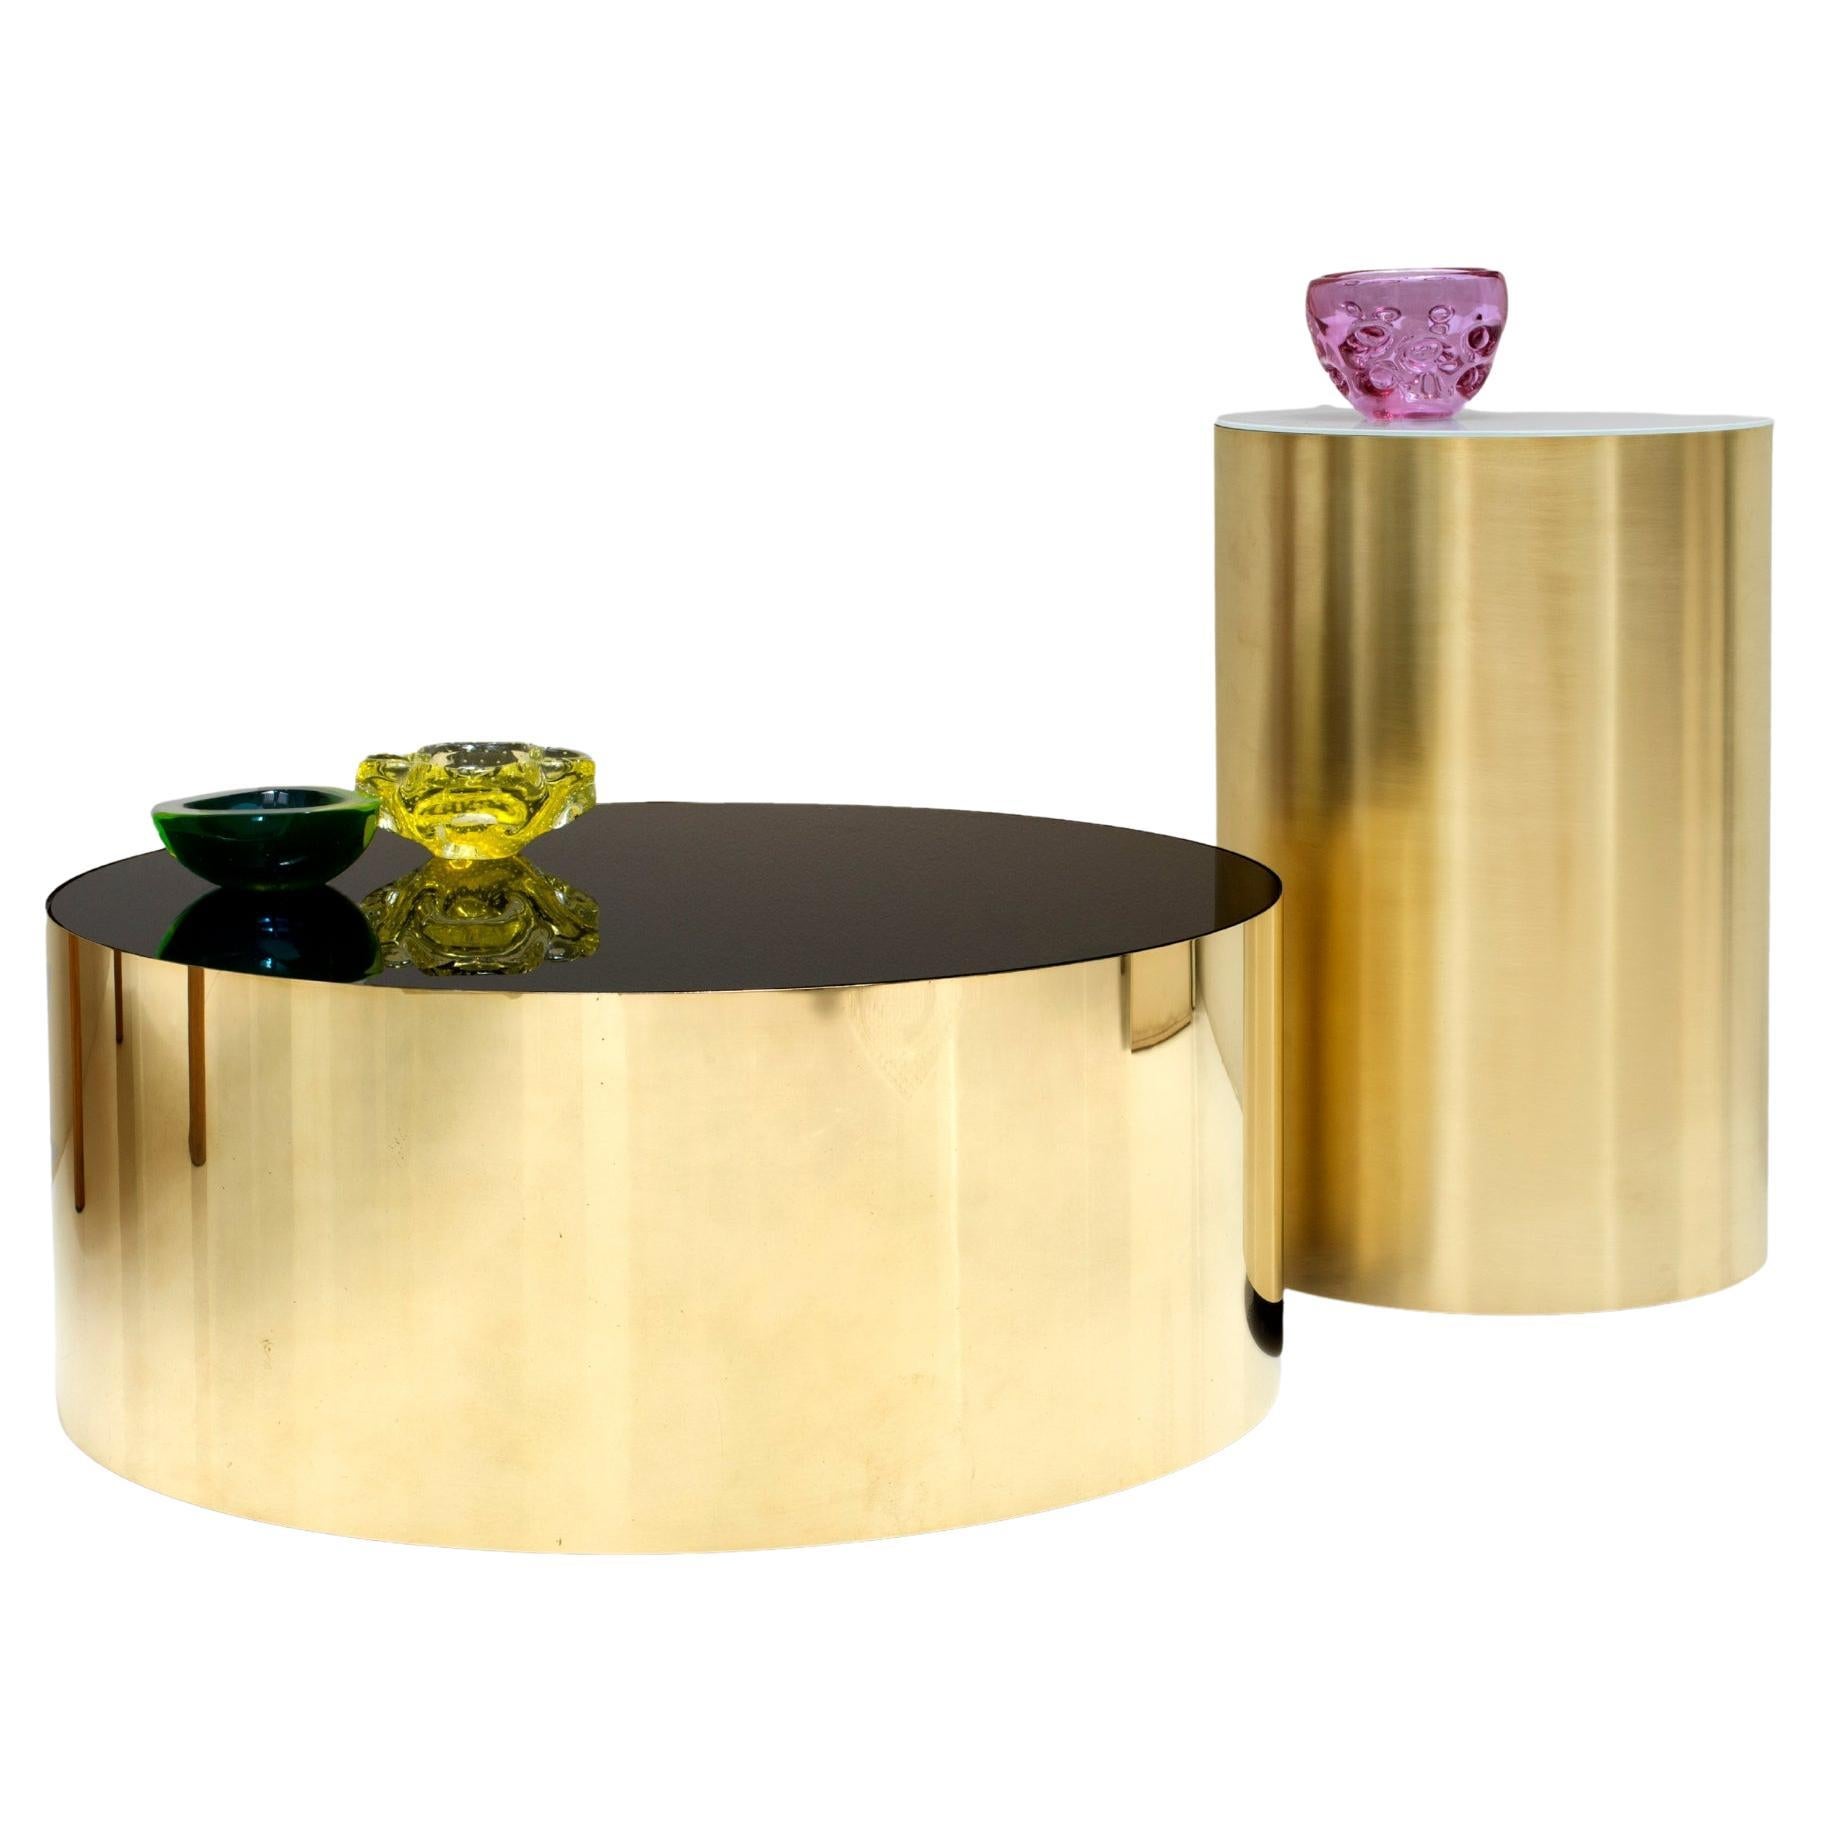 Single Side Table, Full Moon Shape, Brass/Steel & HighGloss Laminate, Size M